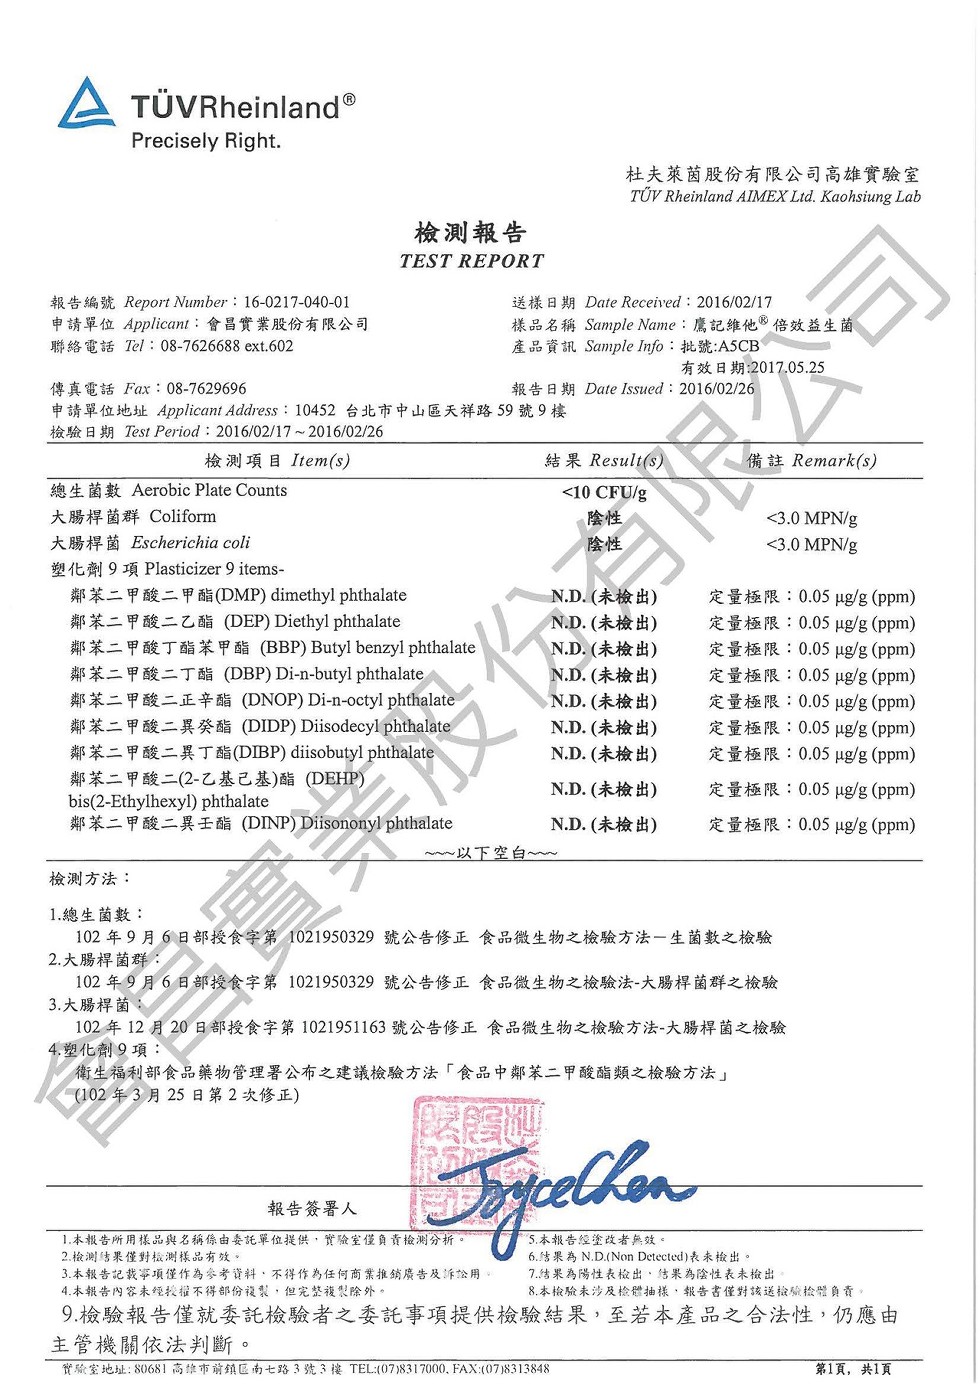 A TÜVRheinland，杜夫萊茵股份有限公司高雄實驗室，TŰV Rheinland AIMEX Ltd. Kaohsiung Lab，檢測報告，報告編號Report Number : 16-0217-040-01，申請單位 Applicant: